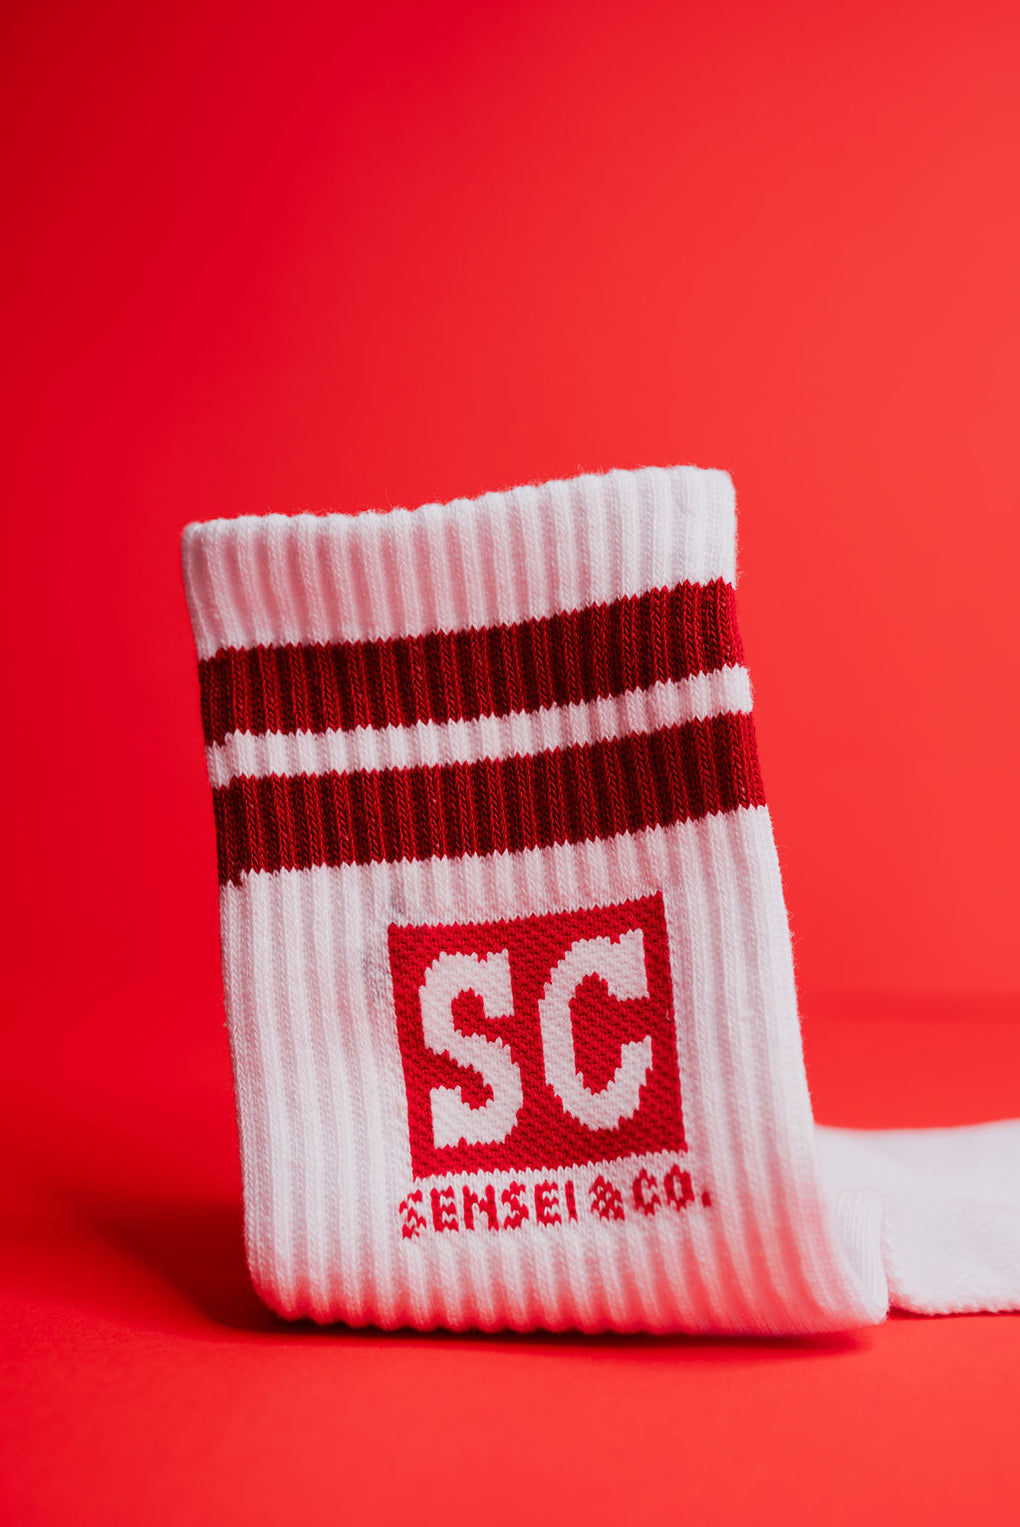 Sensei & Co. Varsity Socks - Hybrid Crew Cut